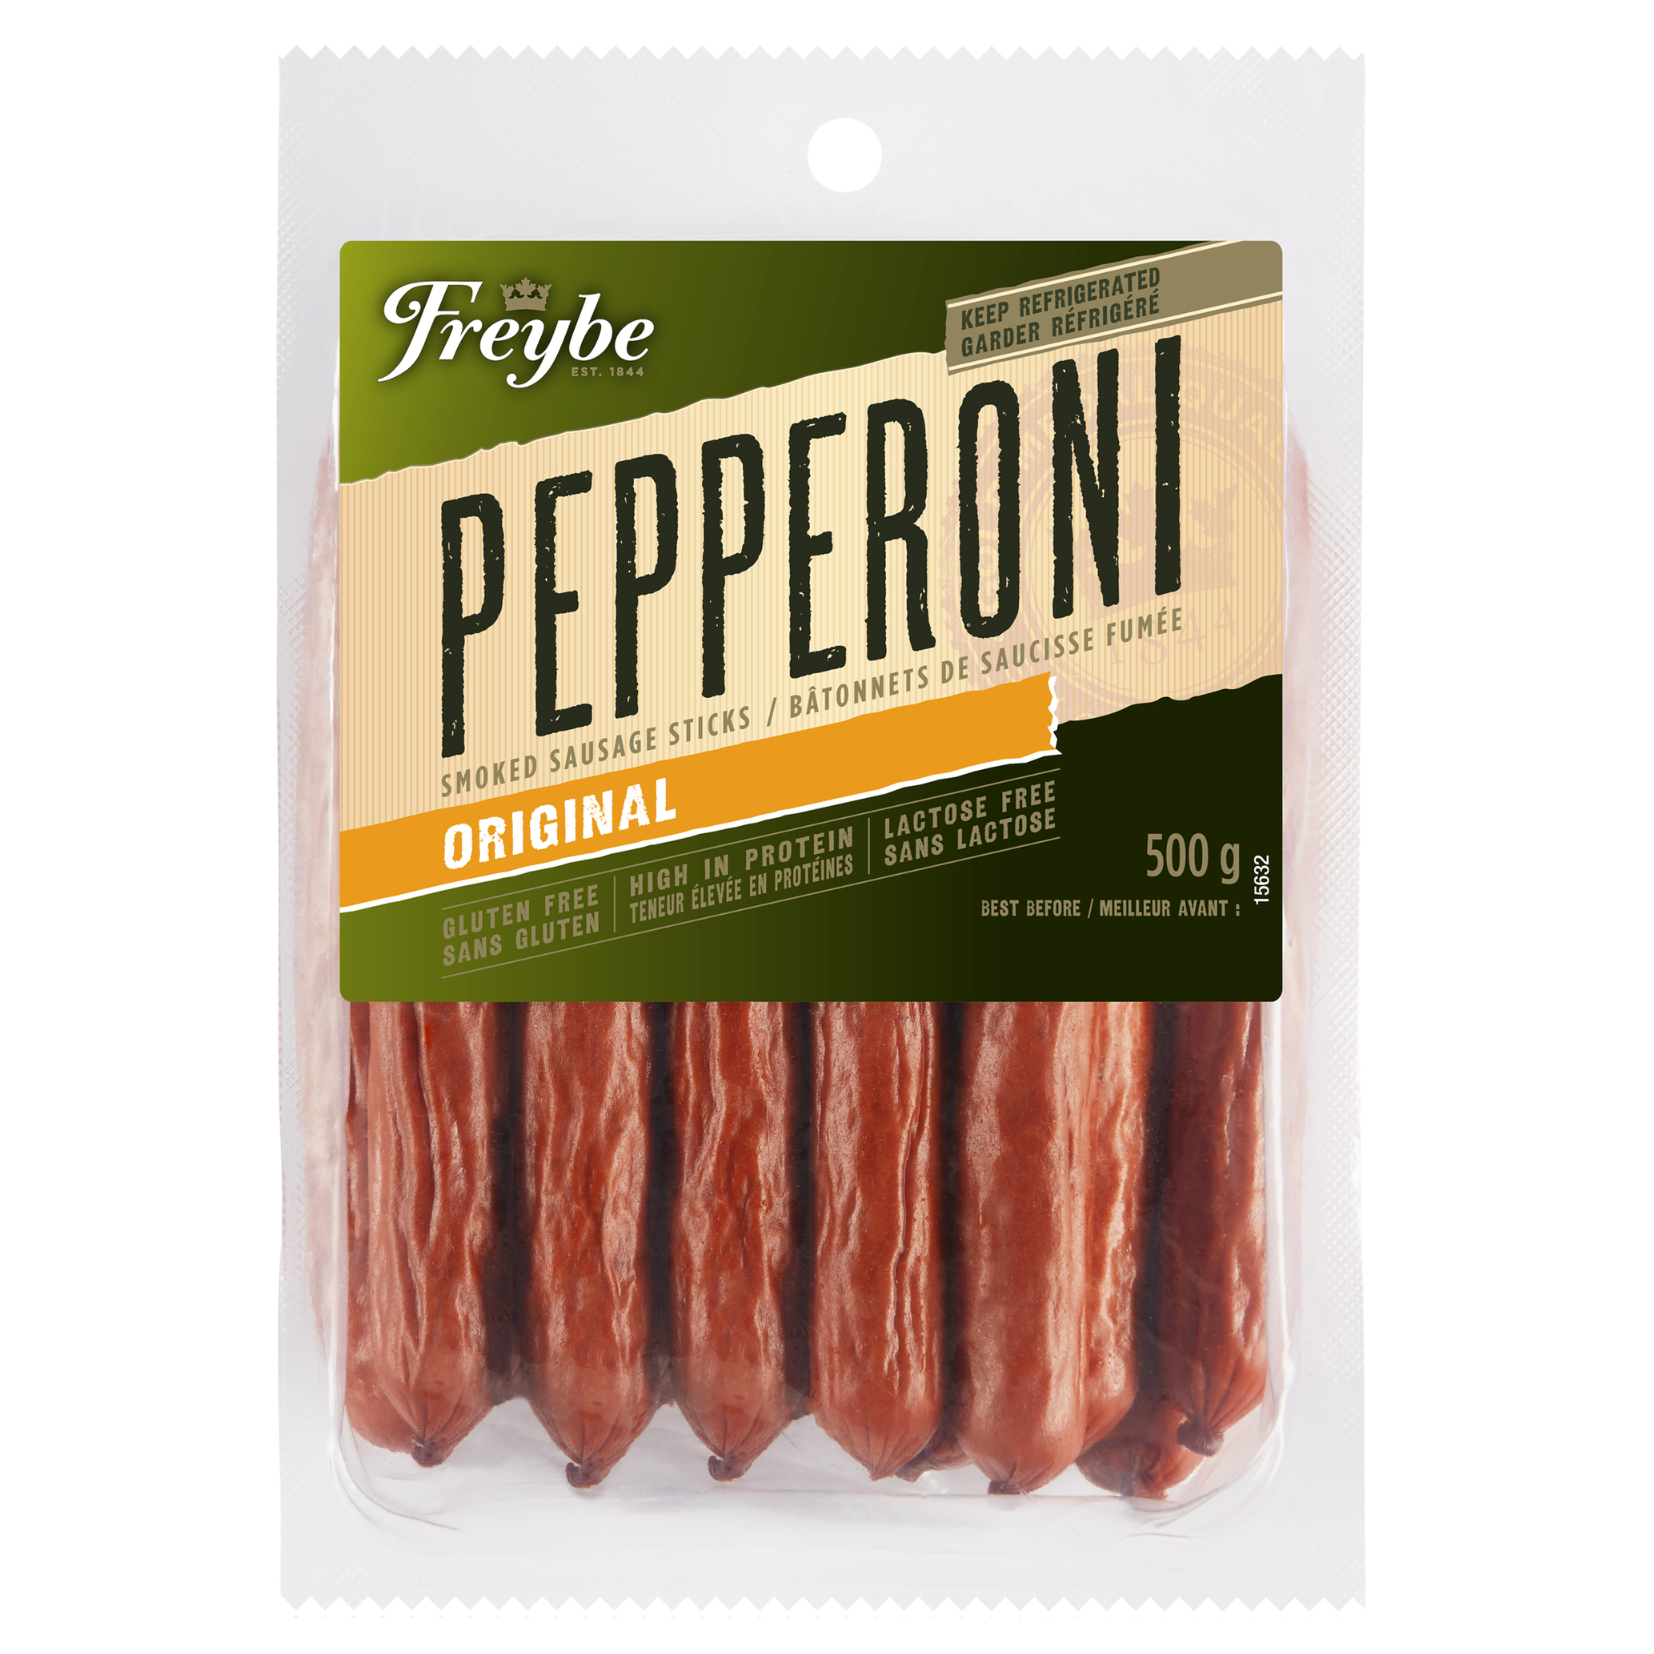 Freybe Original Pepperoni Sticks 450g